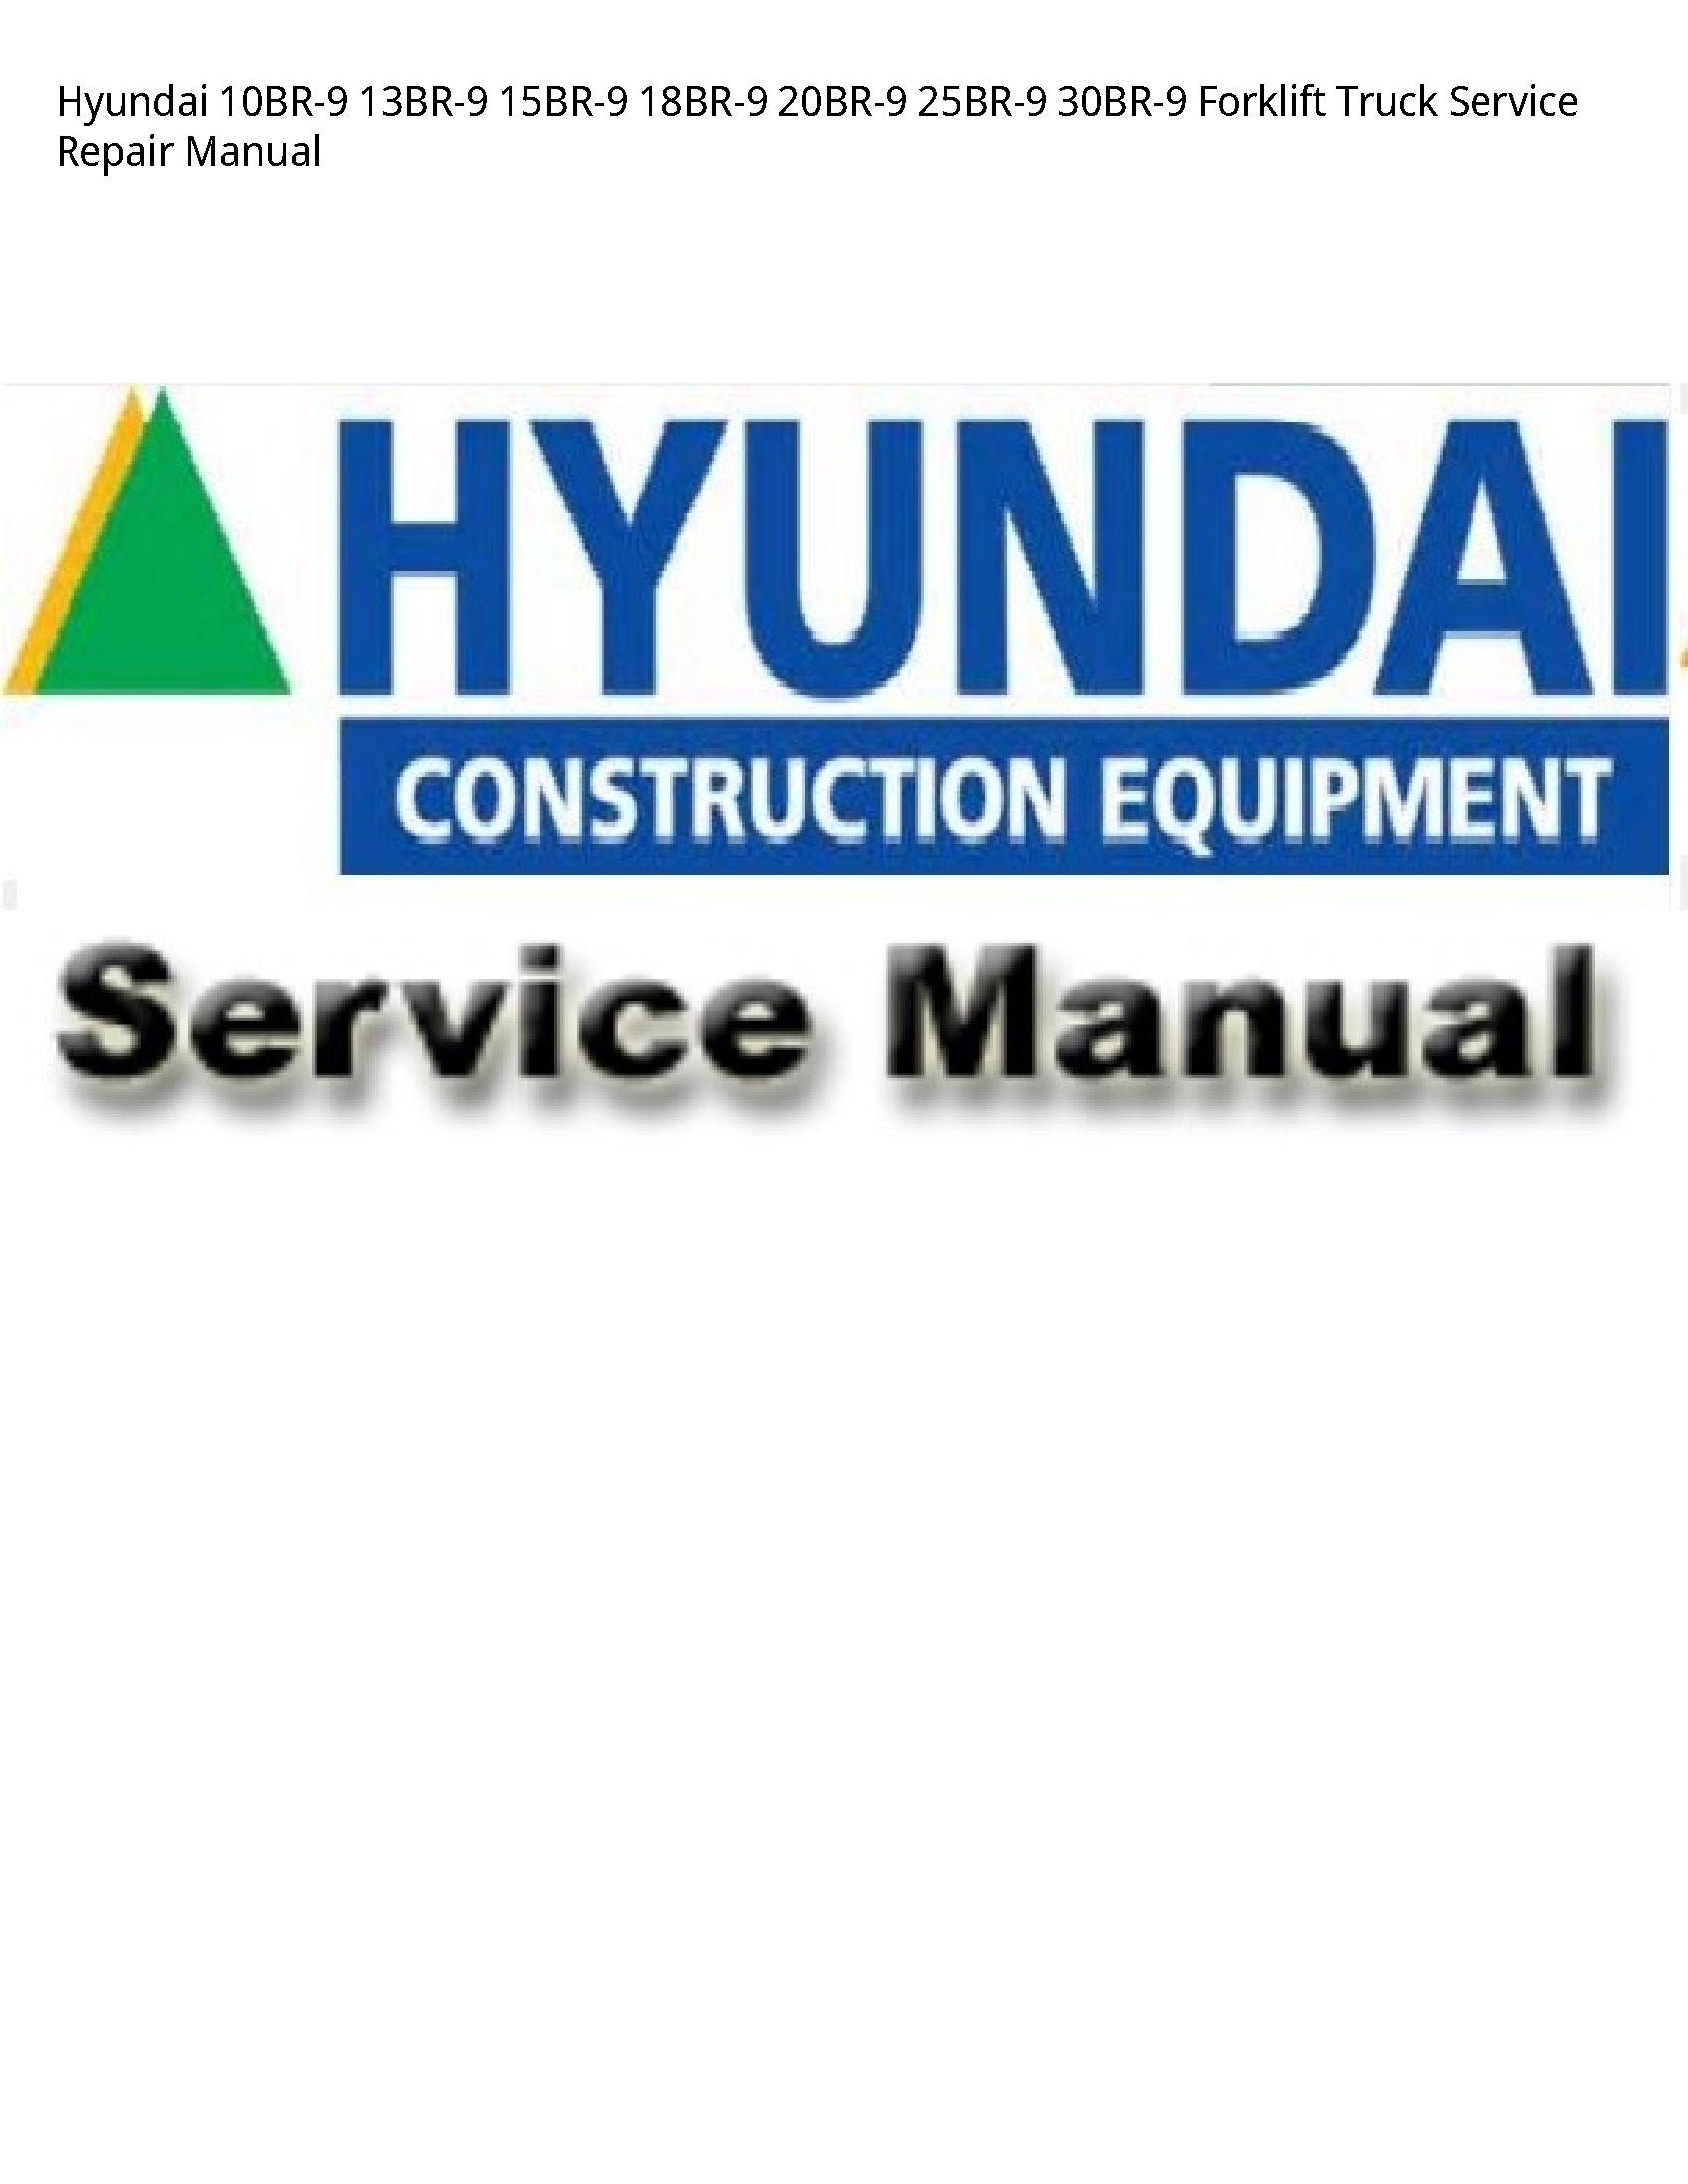 Hyundai 10BR-9 Forklift Truck manual